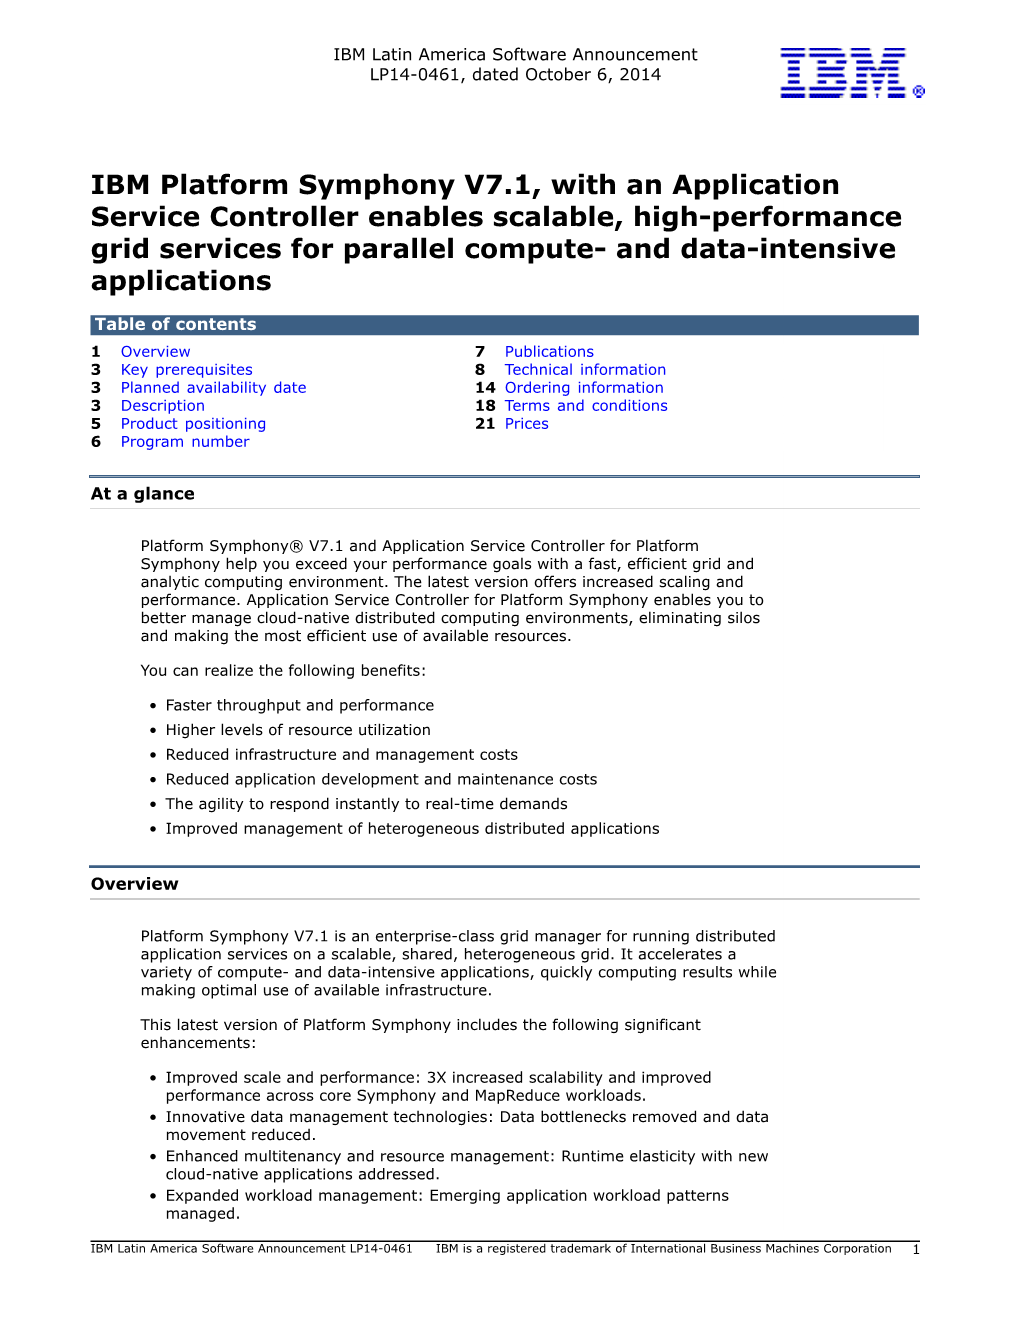 IBM Platform Symphony V7.1, with an Application Service Controller